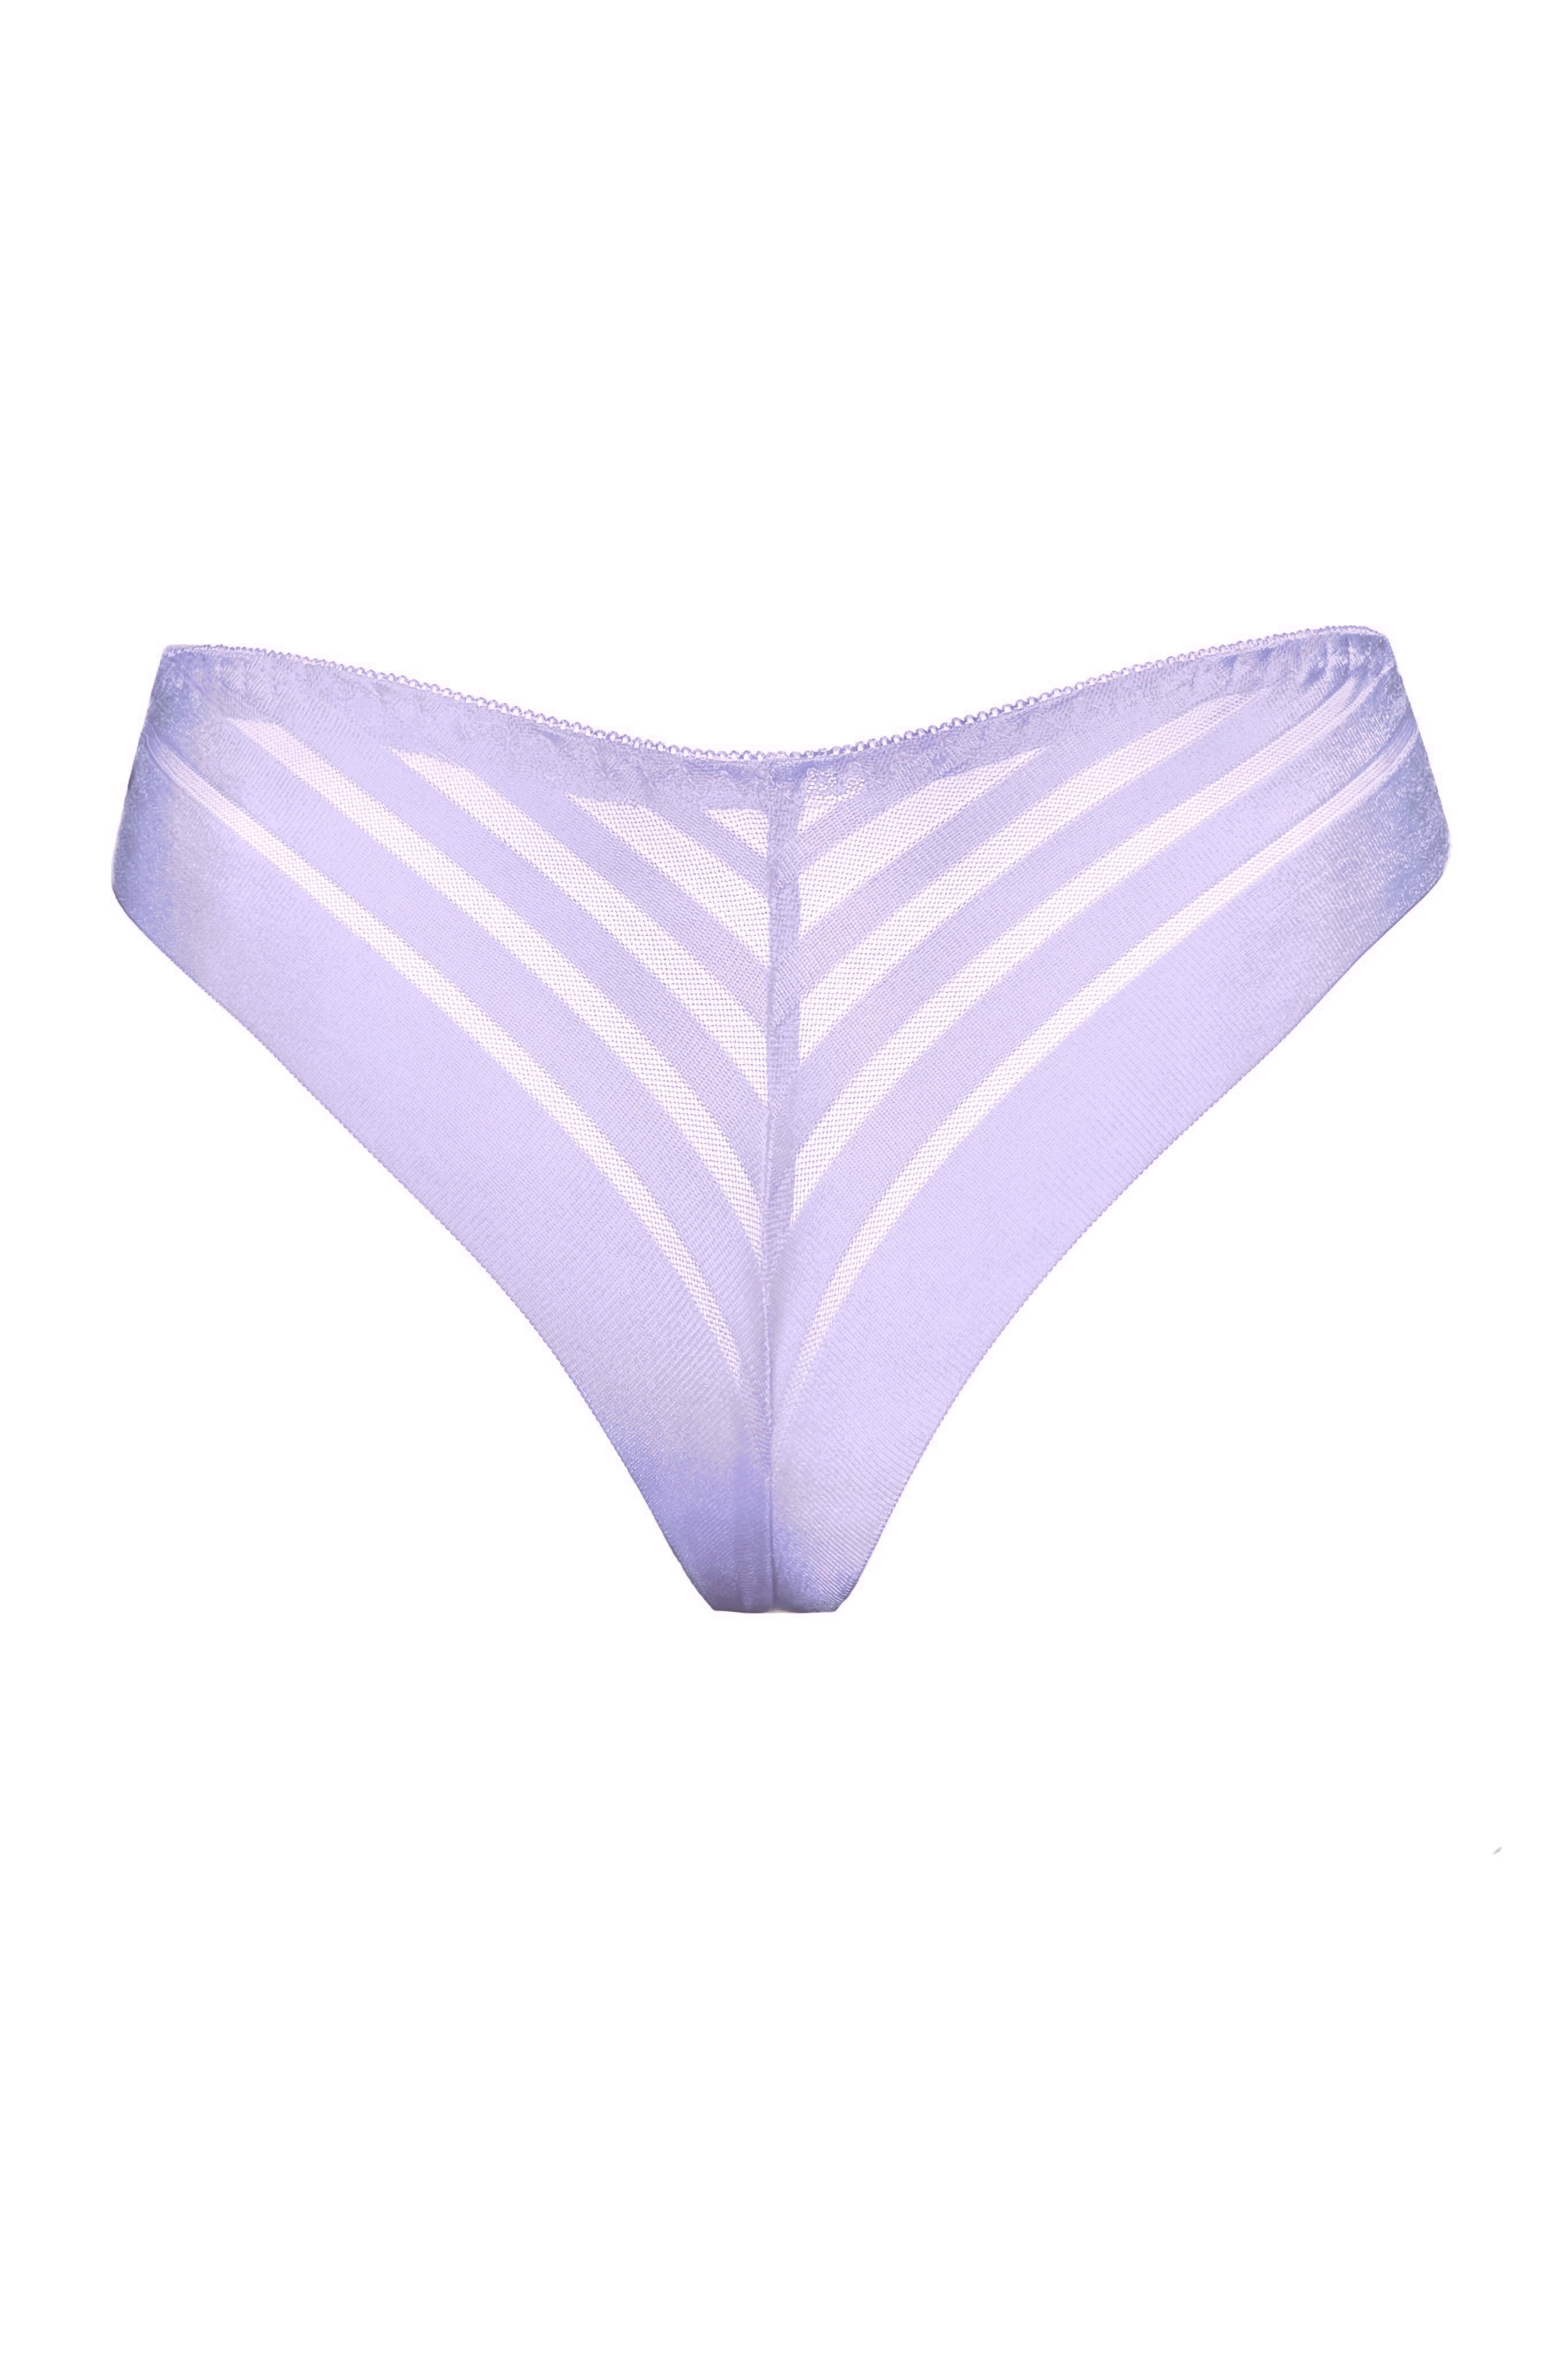 Lucy lavender seamless brazilian panties